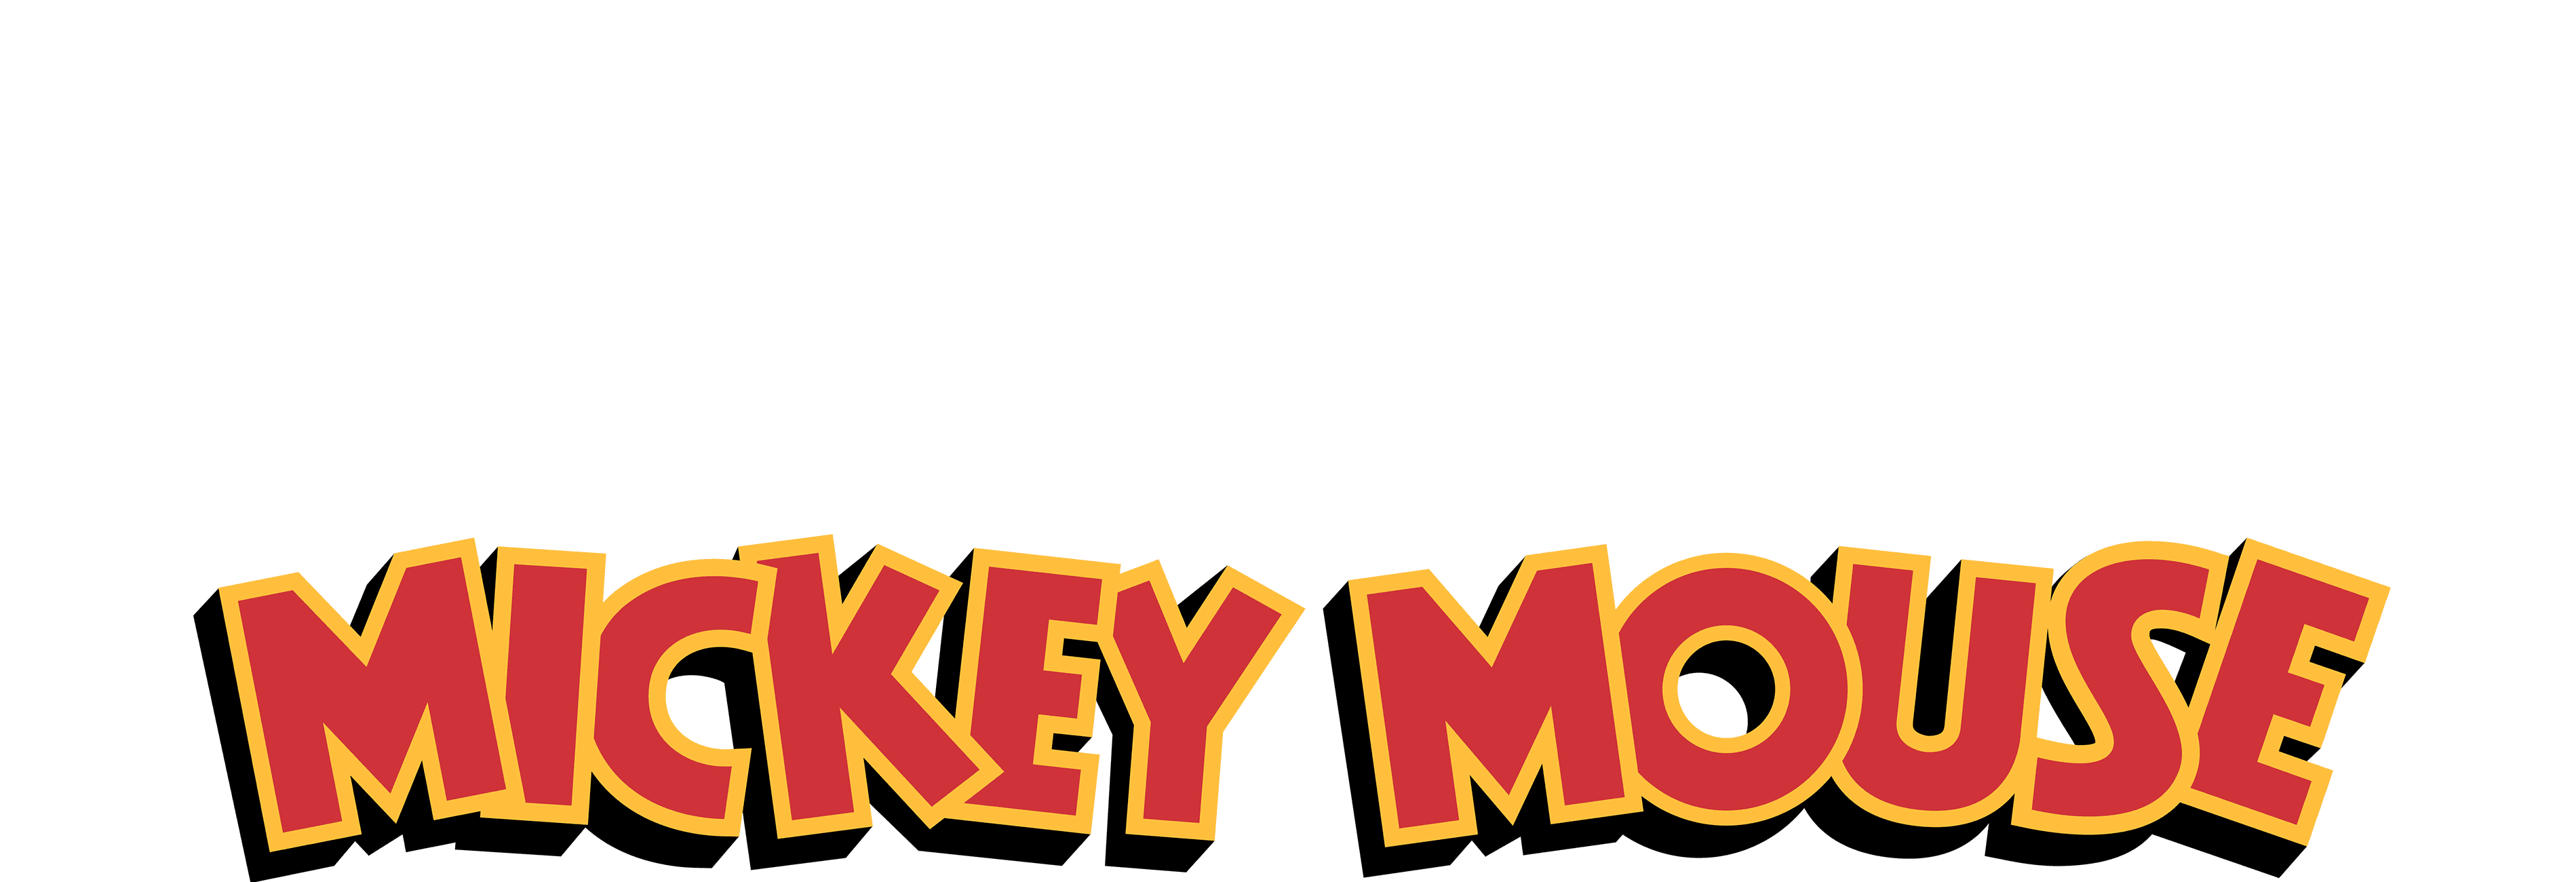 The Wonderful Autumn of Mickey Mouse logo